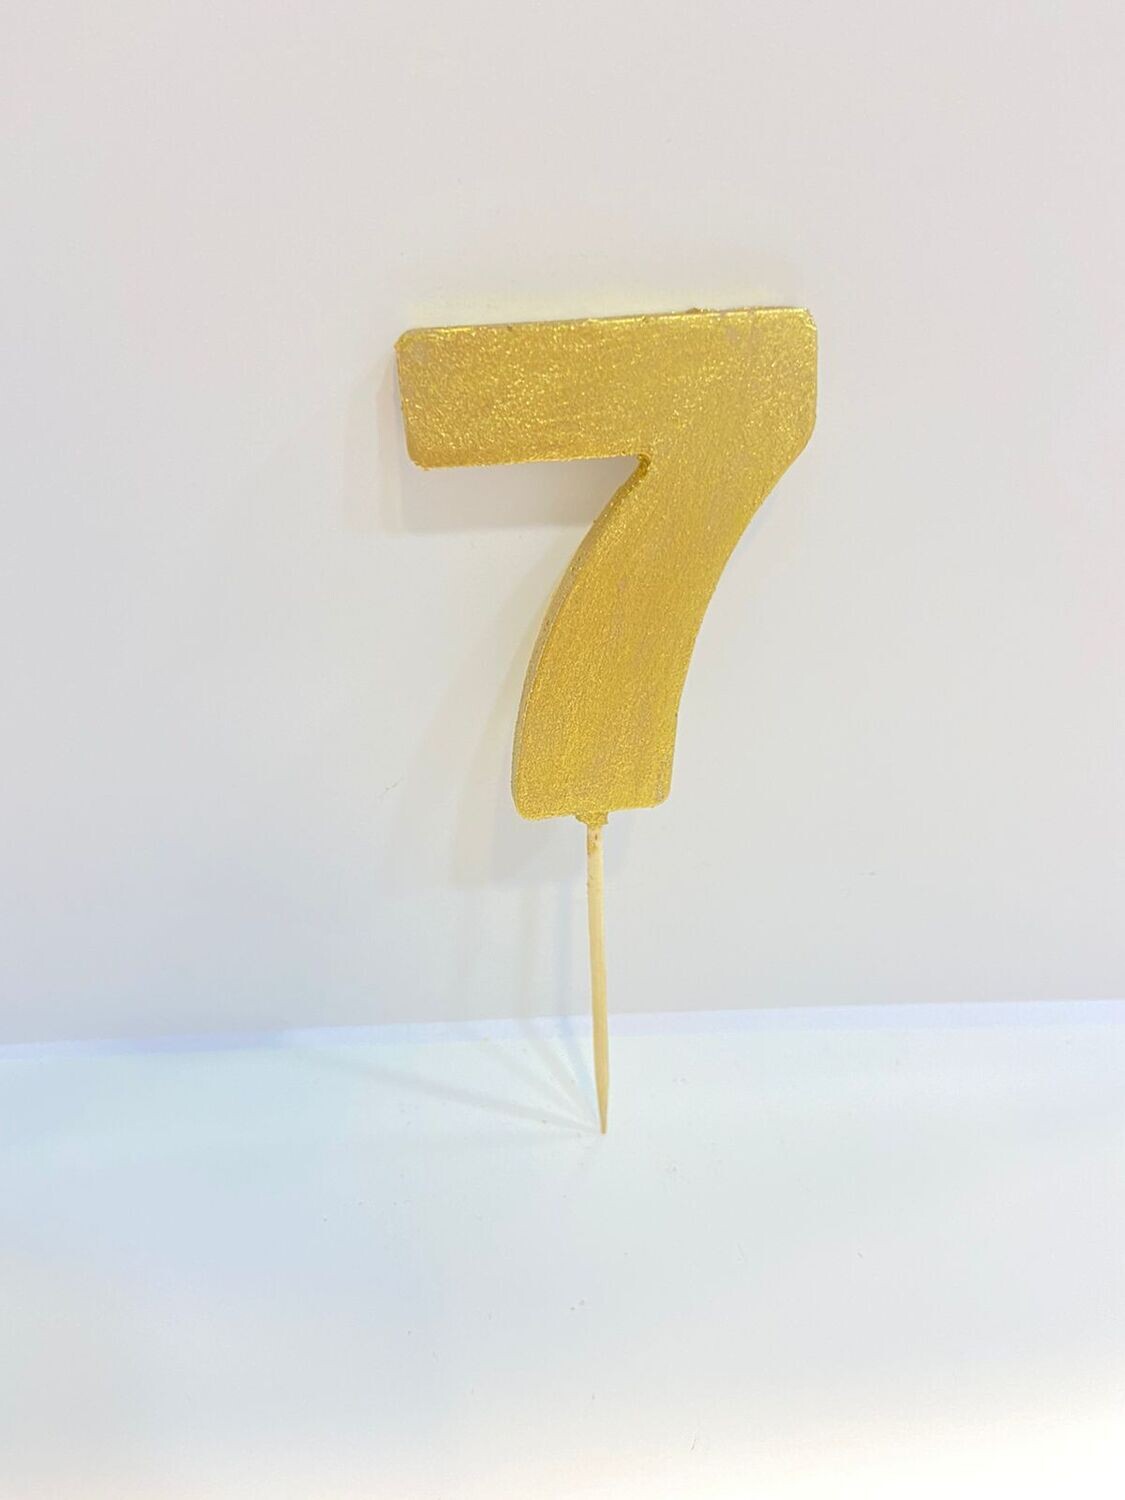 Цифра "7" АНТИЧНАЯ (золотая) на шпажке, из шоколадной глазури